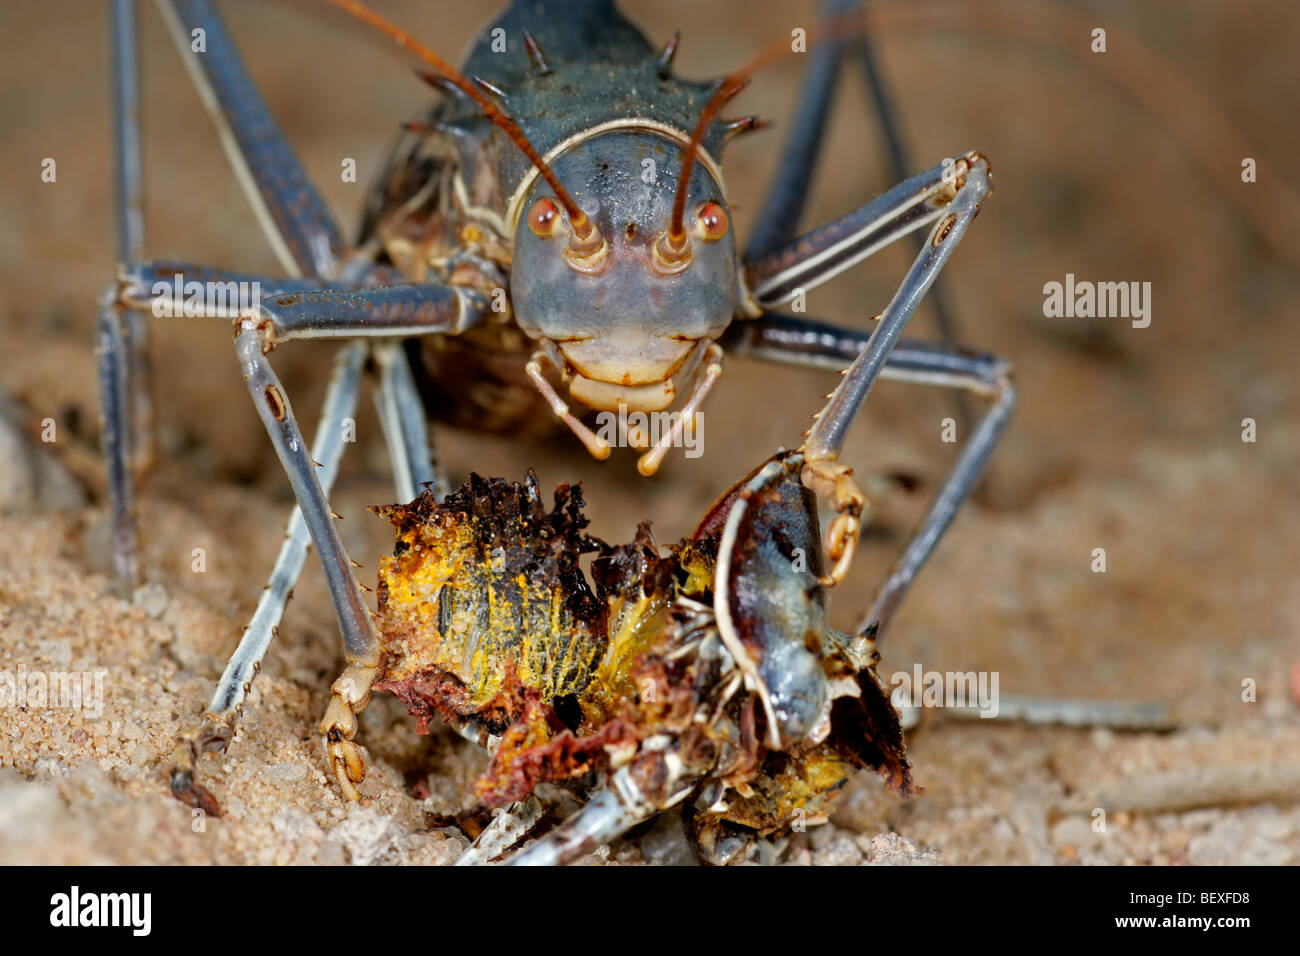 Feeding African Armoured ground cricket (Family Bradyporidae) Stock Photo